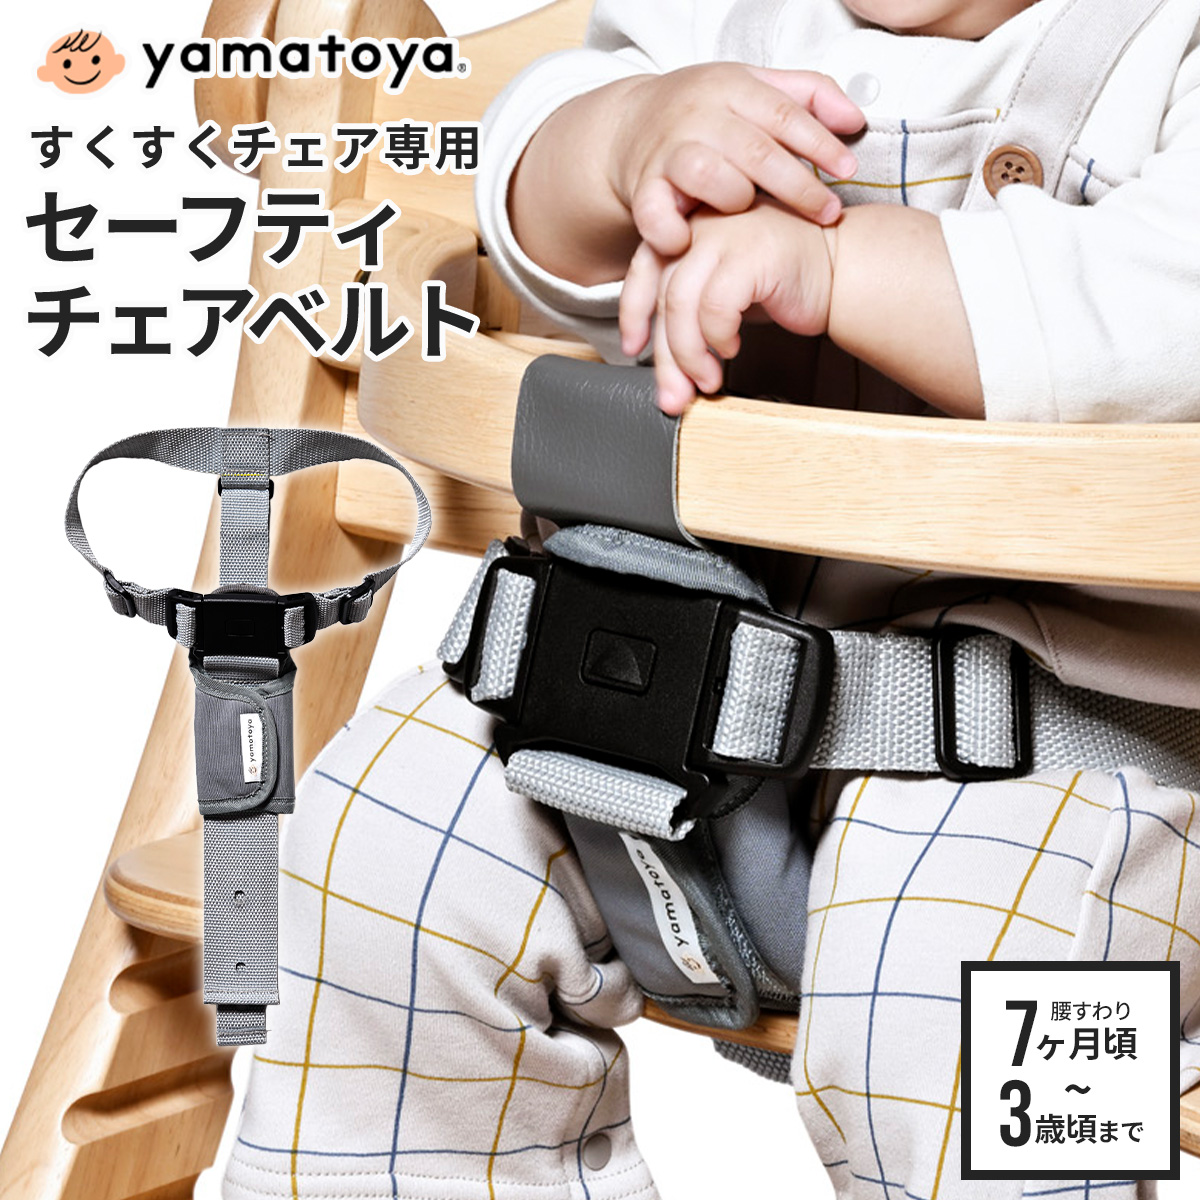  Yamato магазин безопасность стул ремень .... стул ремень детский стул детский стул для baby ребенок вставание предотвращение Kids стул детский стул стул 